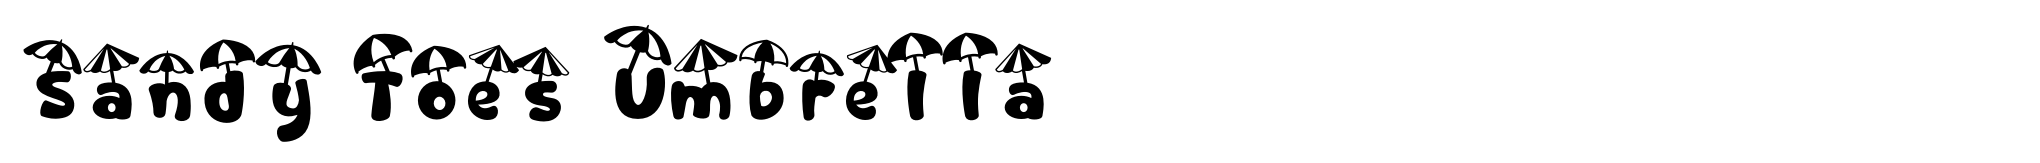 Sandy Toes Umbrella image